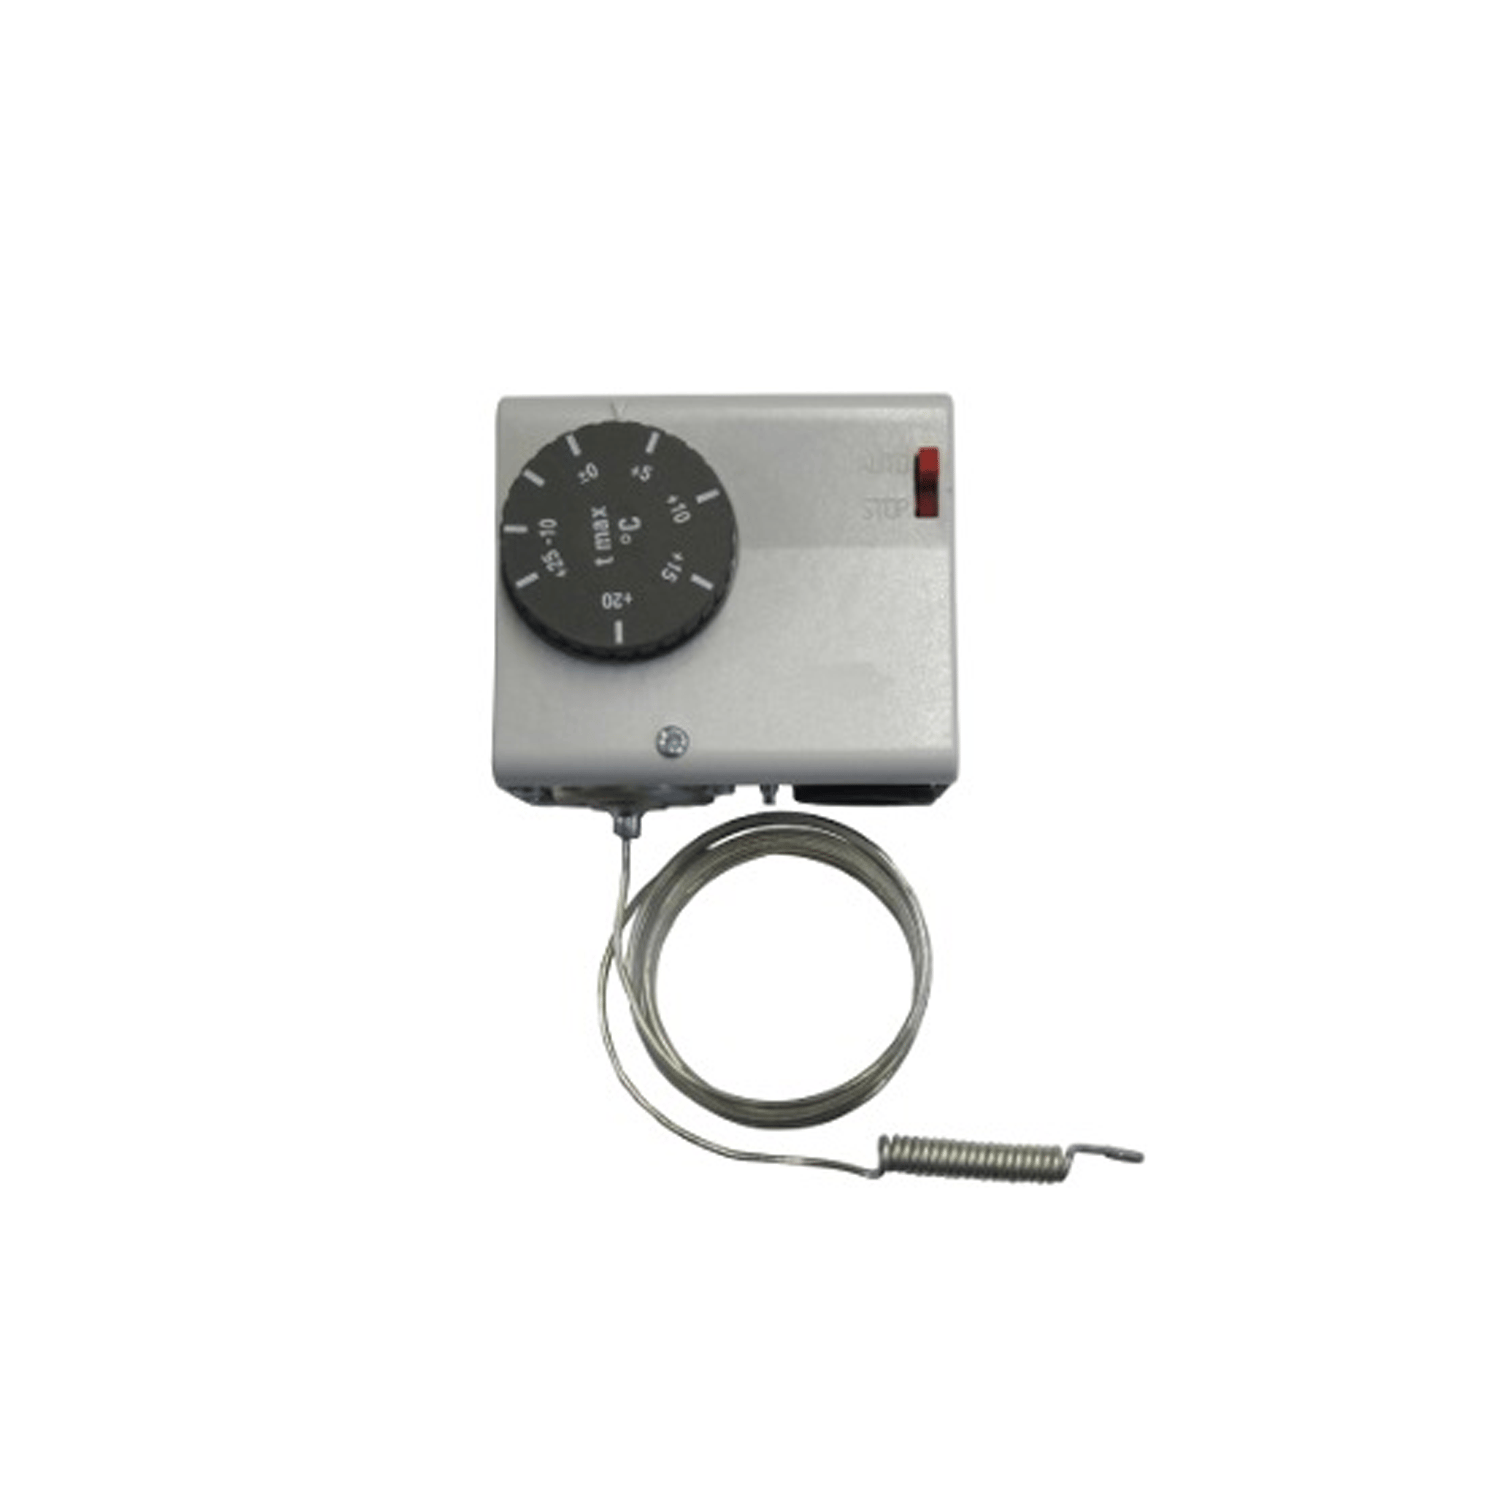 Thermostat Alco TS1-F3A 4367400 + mehr günstig kaufen